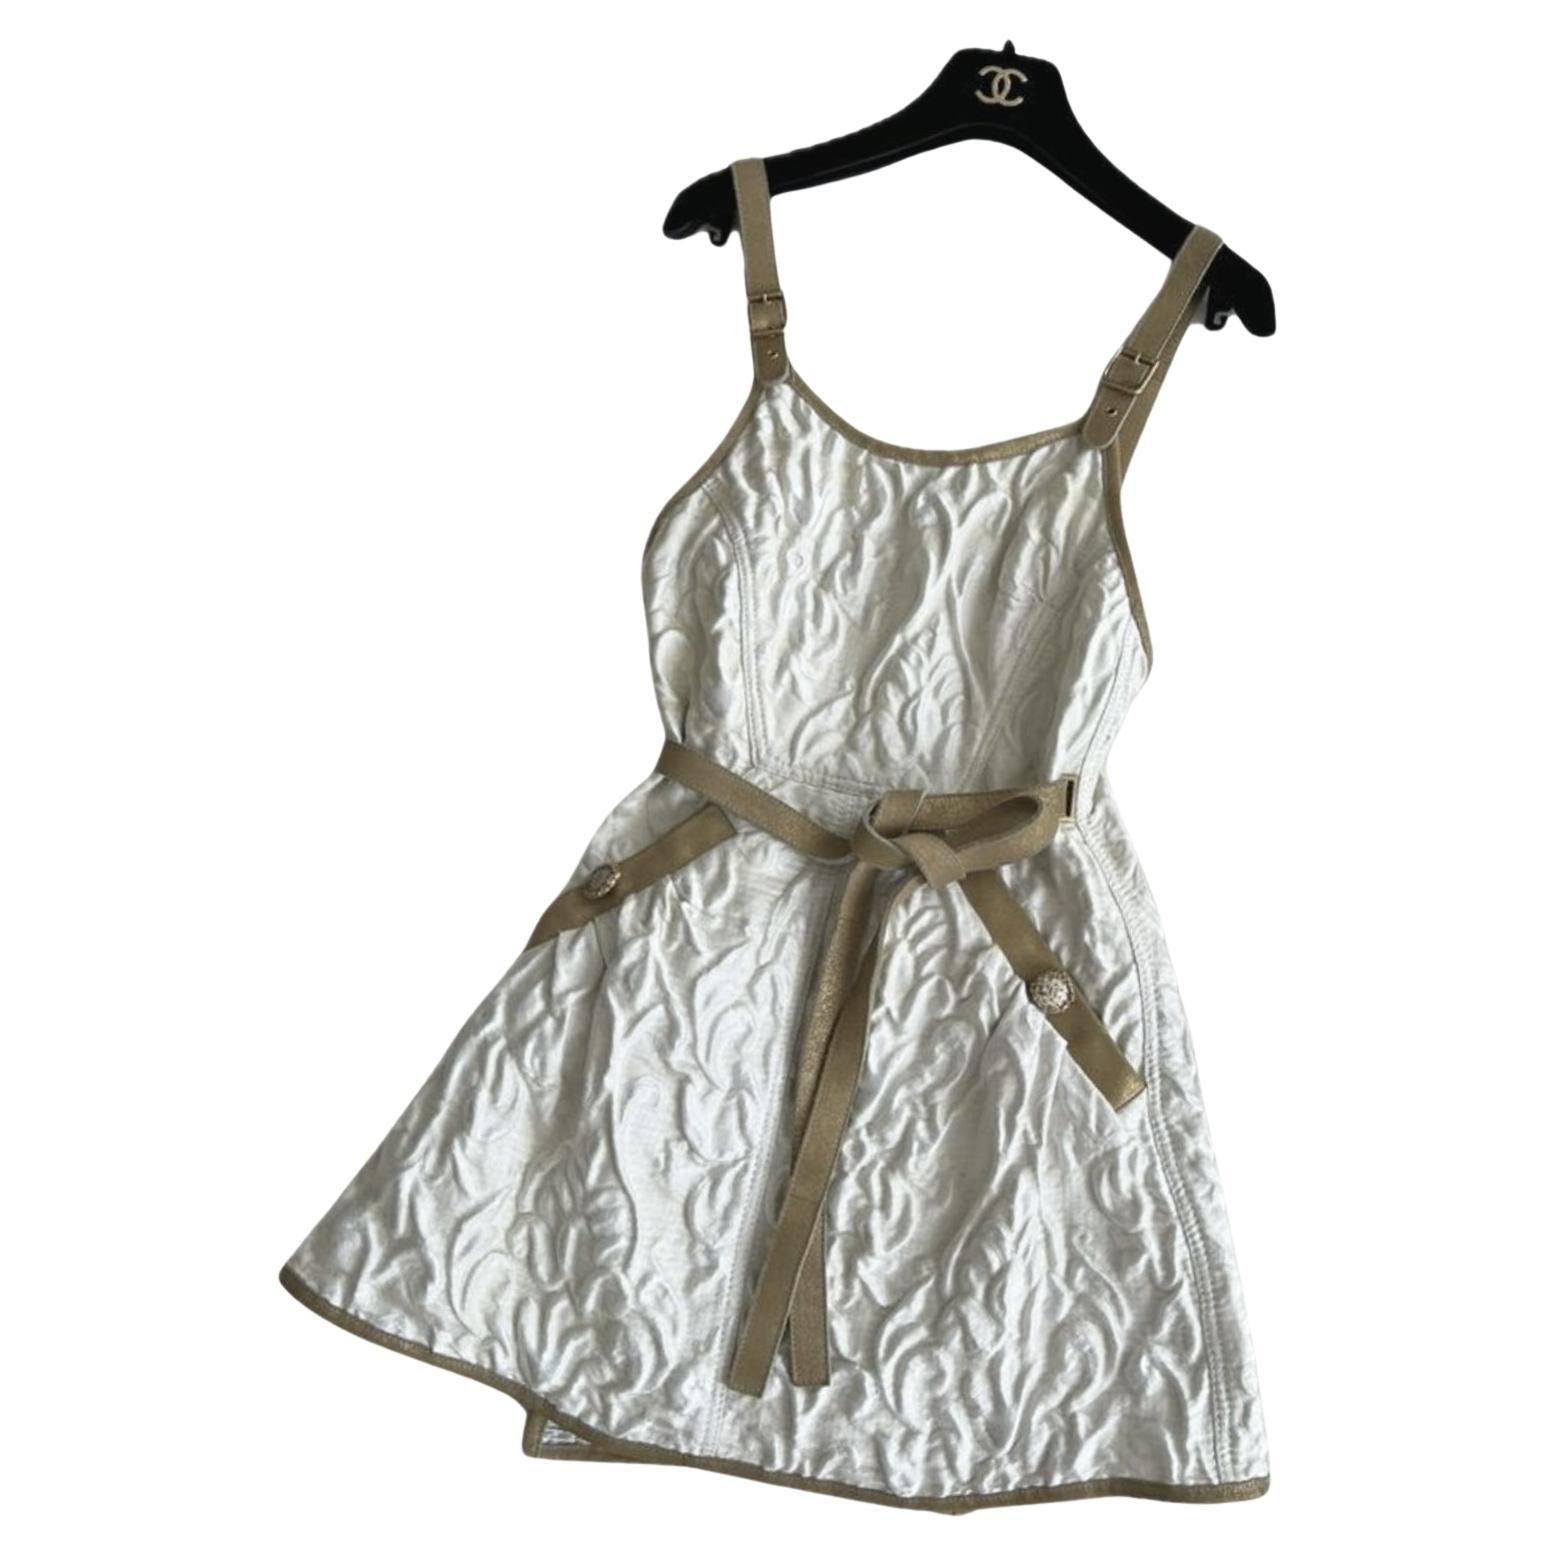 Chanel Paris / Versailles Baroque Style Brocade Dress For Sale